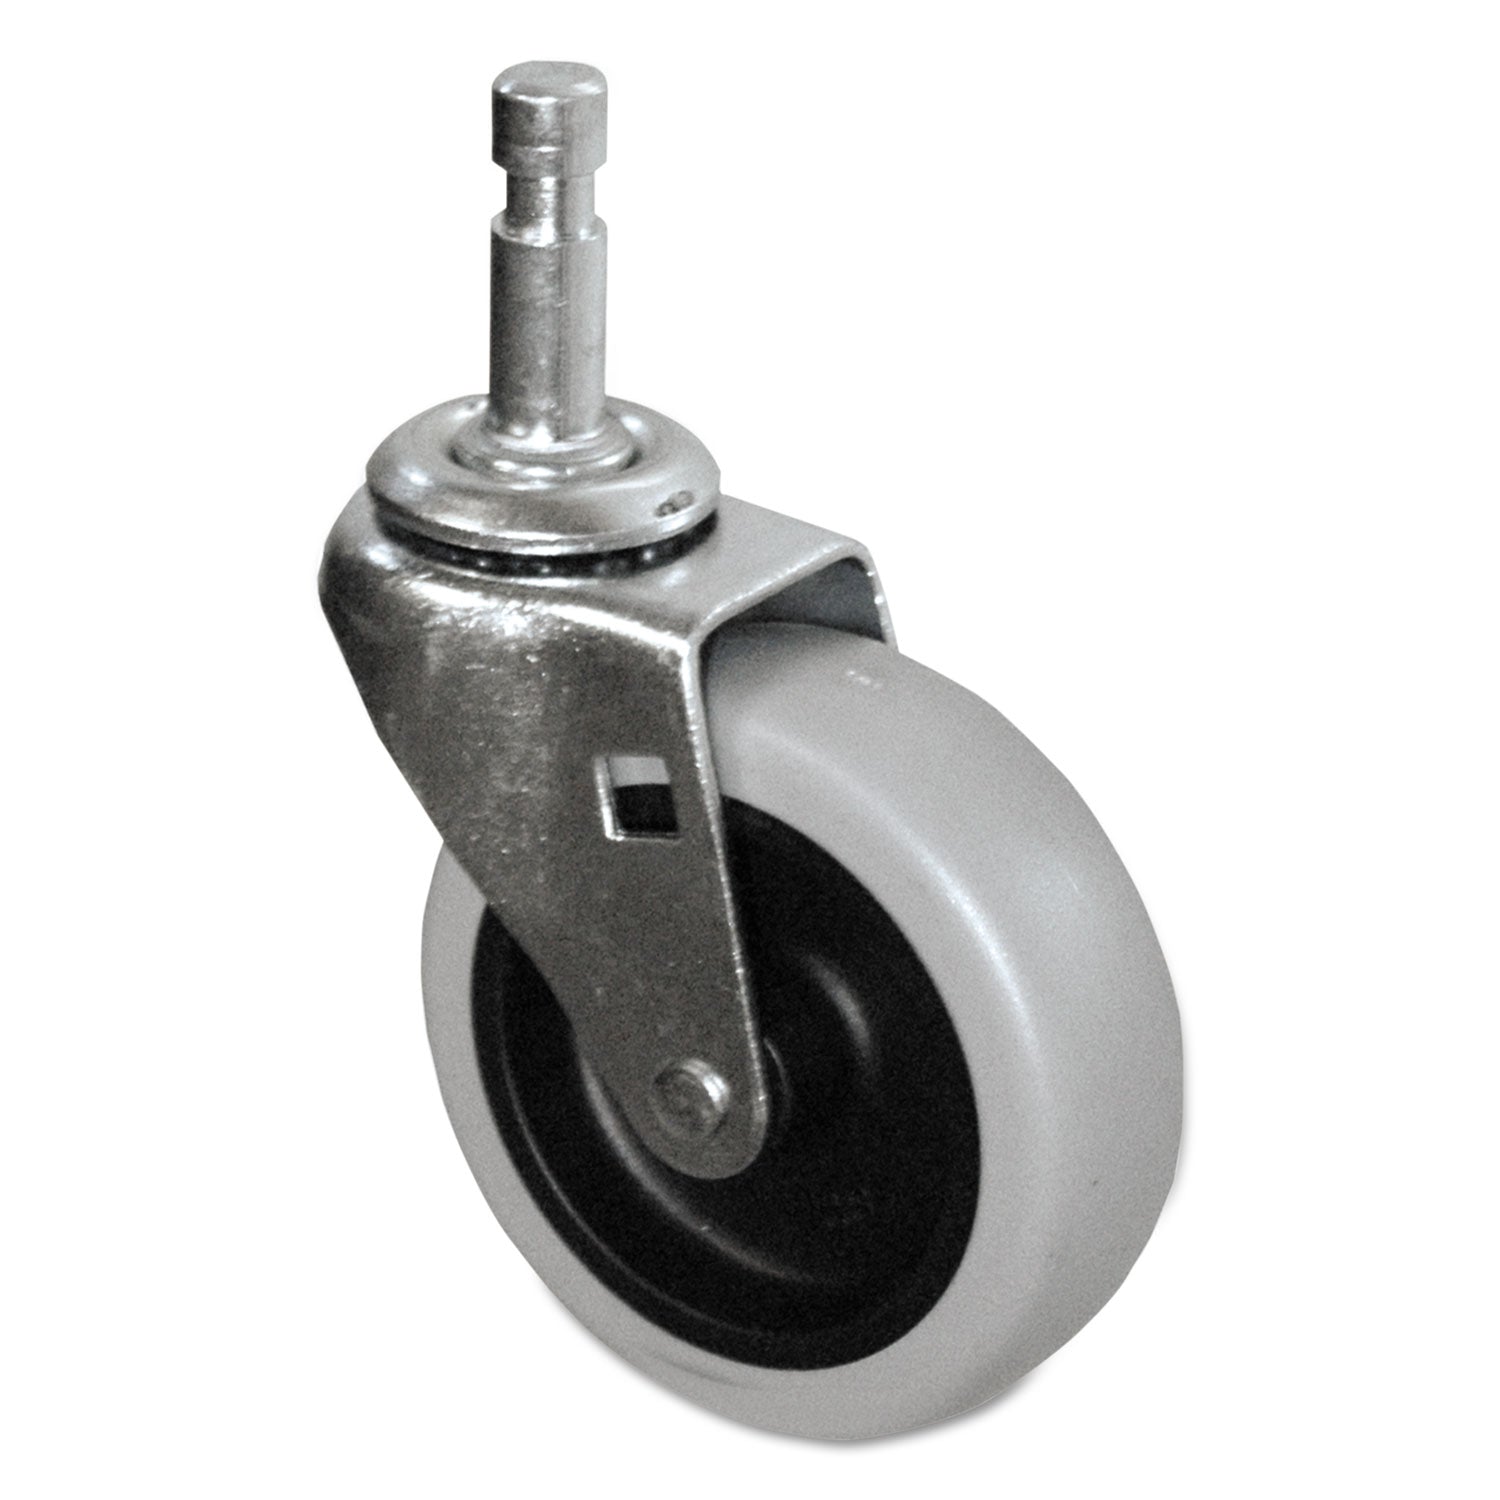 mop-bucket-wringer-replacement-caster-grip-ring-type-c-stem-3-wheel-black-gray-silver_sgsfg6111l3gray - 1